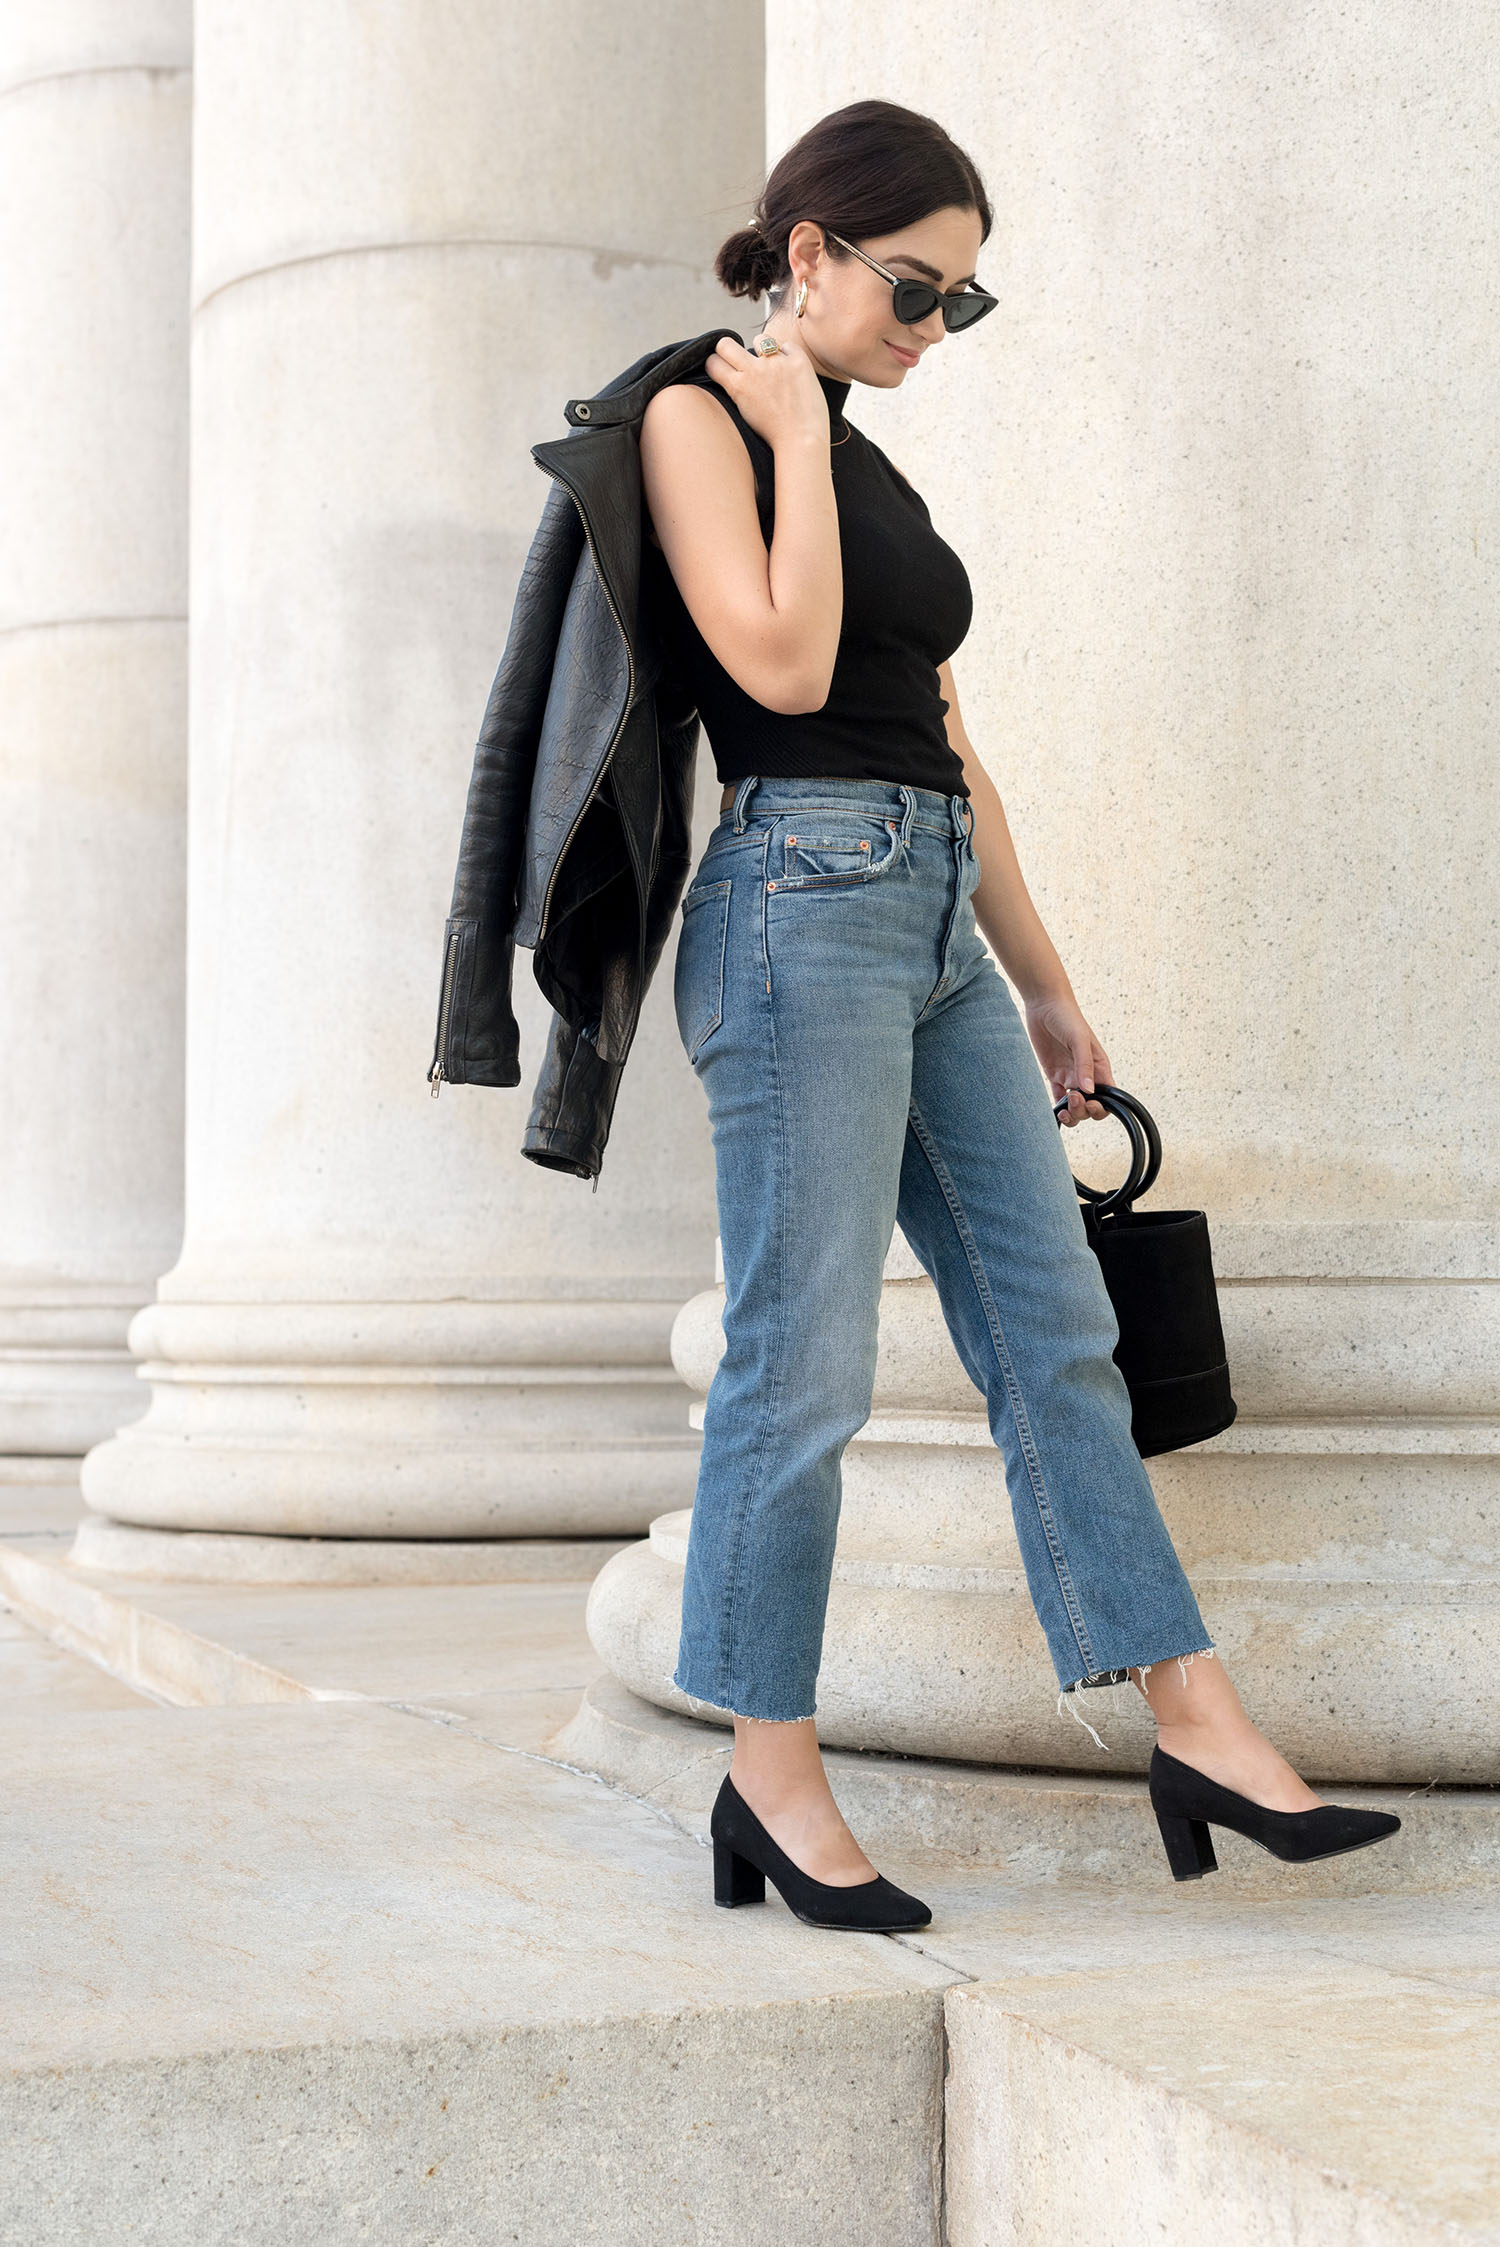 Top Winnipeg fashion blogger Cee Fardoe of Coco & Vera walks outside the Bank of Montreal in Winnipeg wearing a Le Chateau top and Grlfrnd Helena jeans